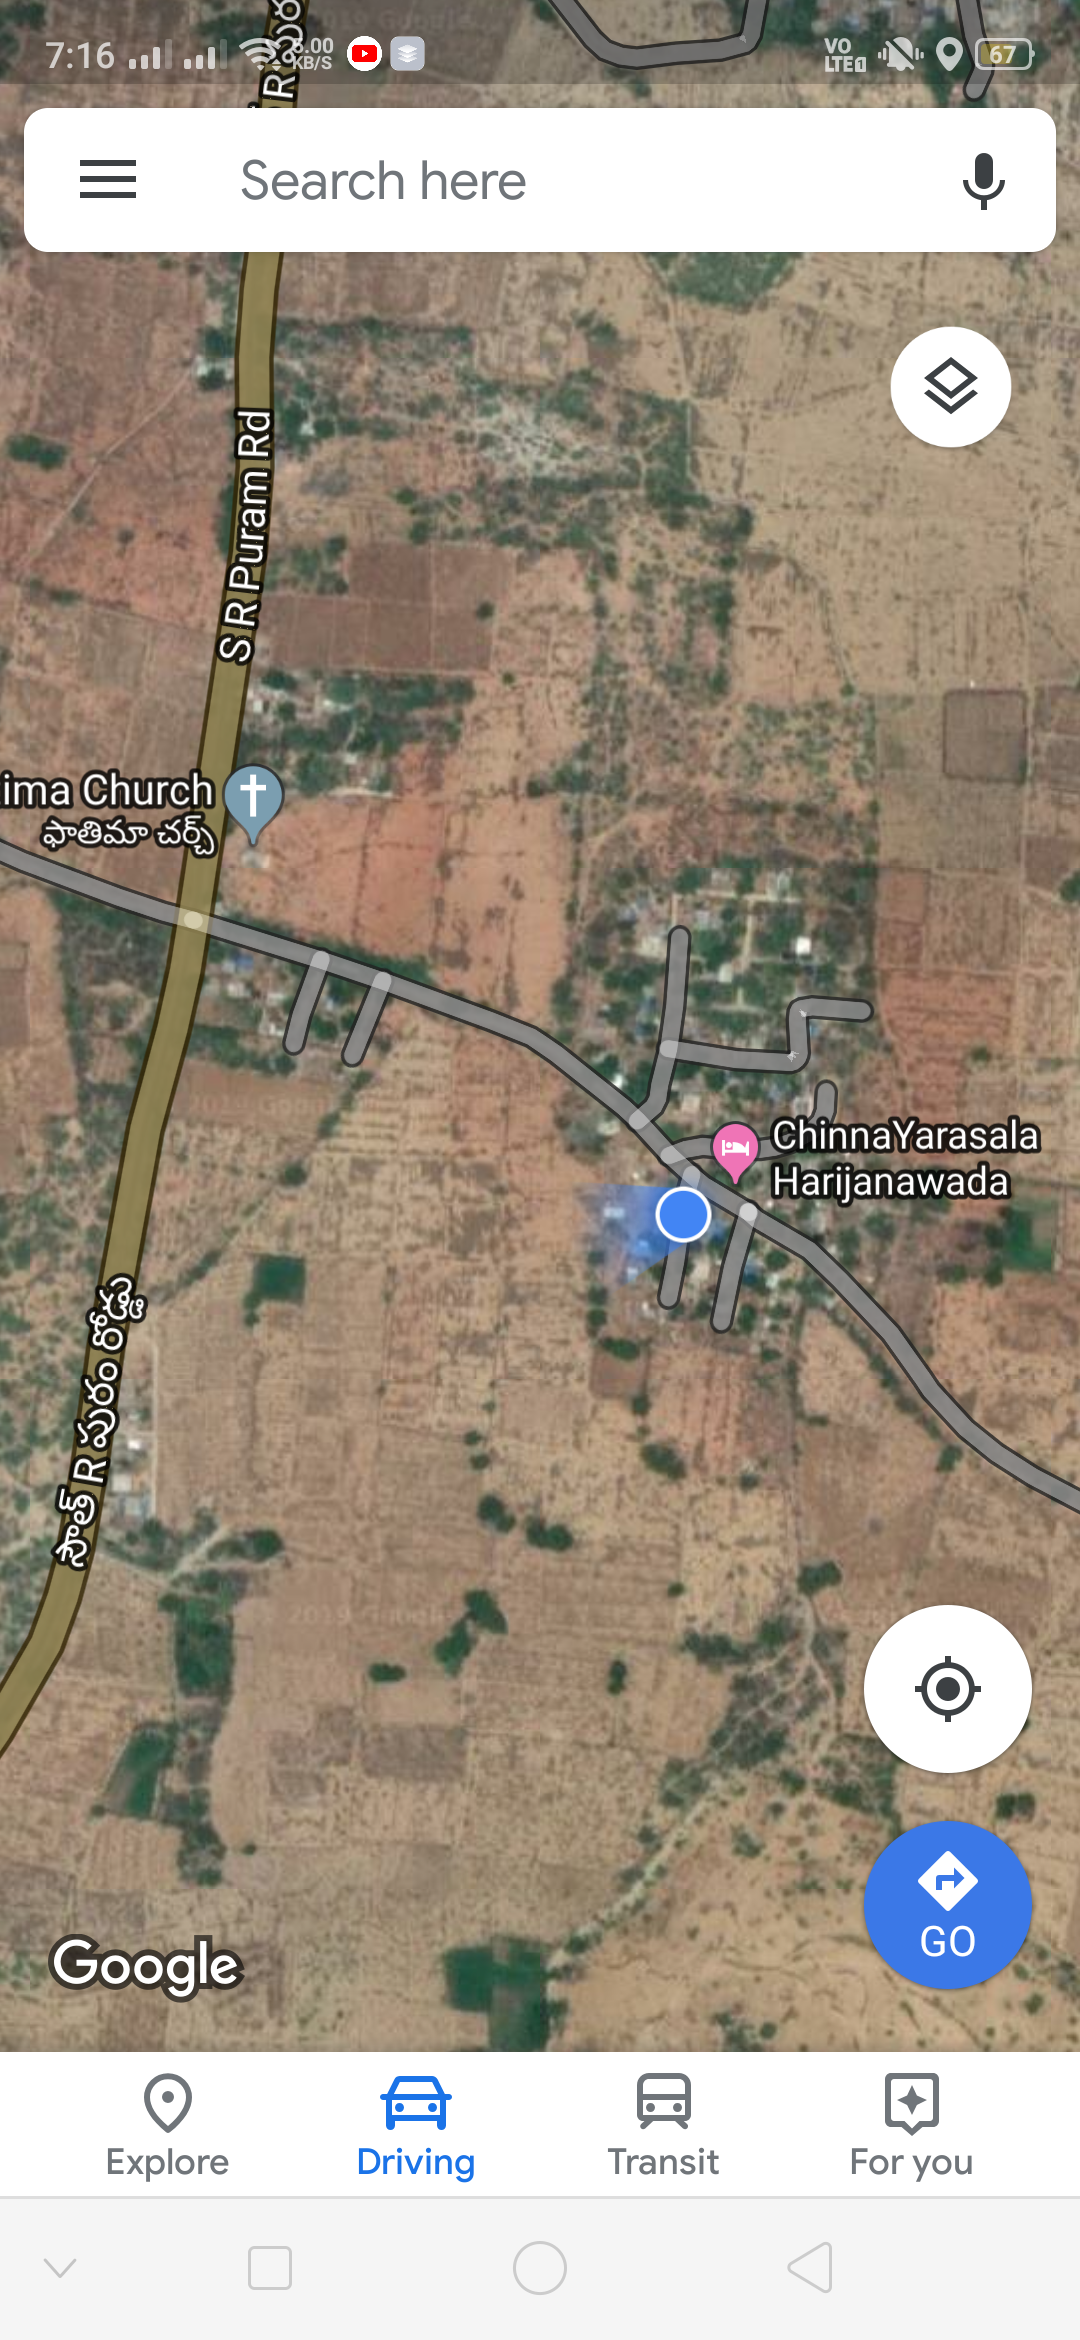 Balanagar, Hyderabad: Map, Property Rates, Projects, Photos, Reviews, Info